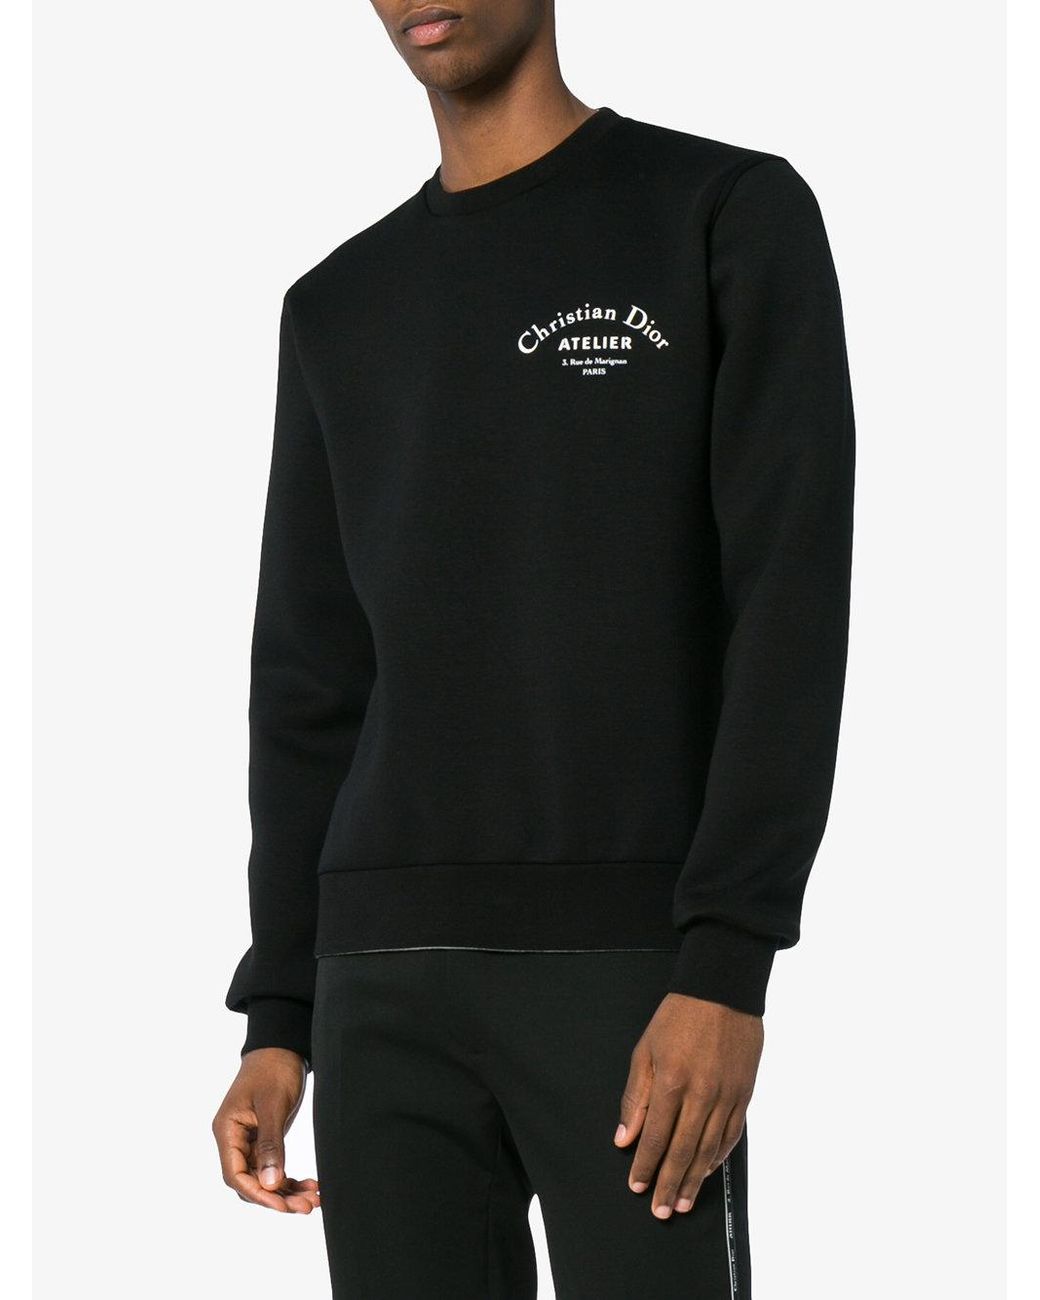 Dior Atelier Logo Print Crew Neck Sweatshirt in Black for Men | Lyst